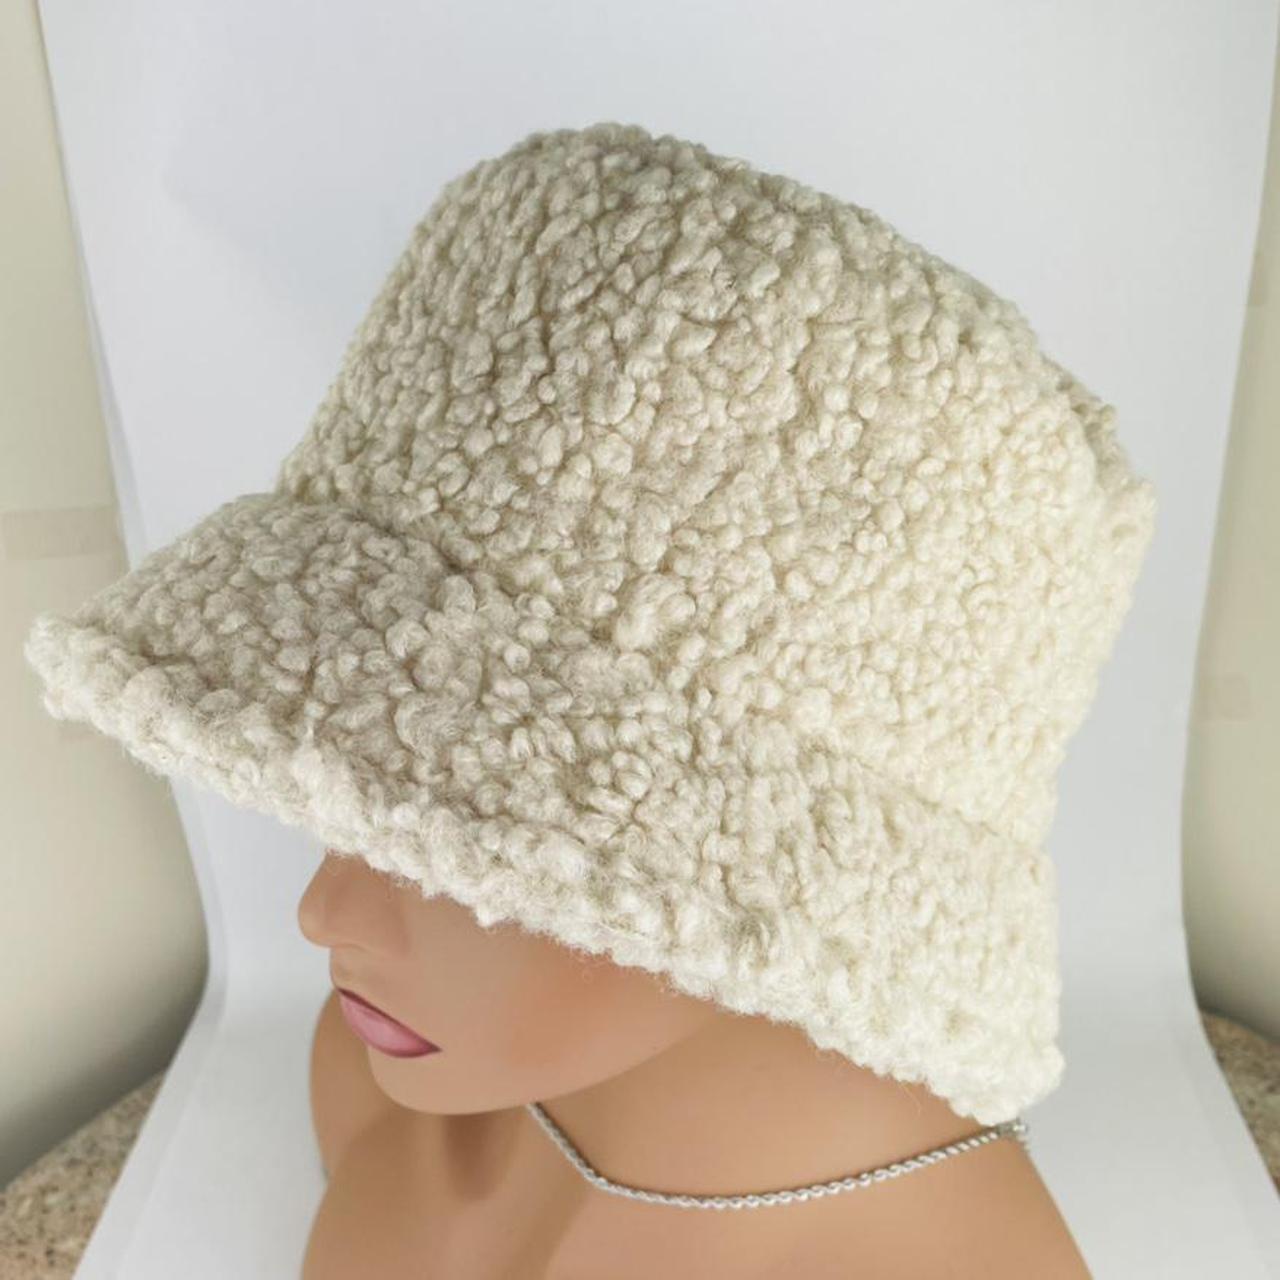 Product Image 1 - Beautiful warm beige 
#buckethat #hat